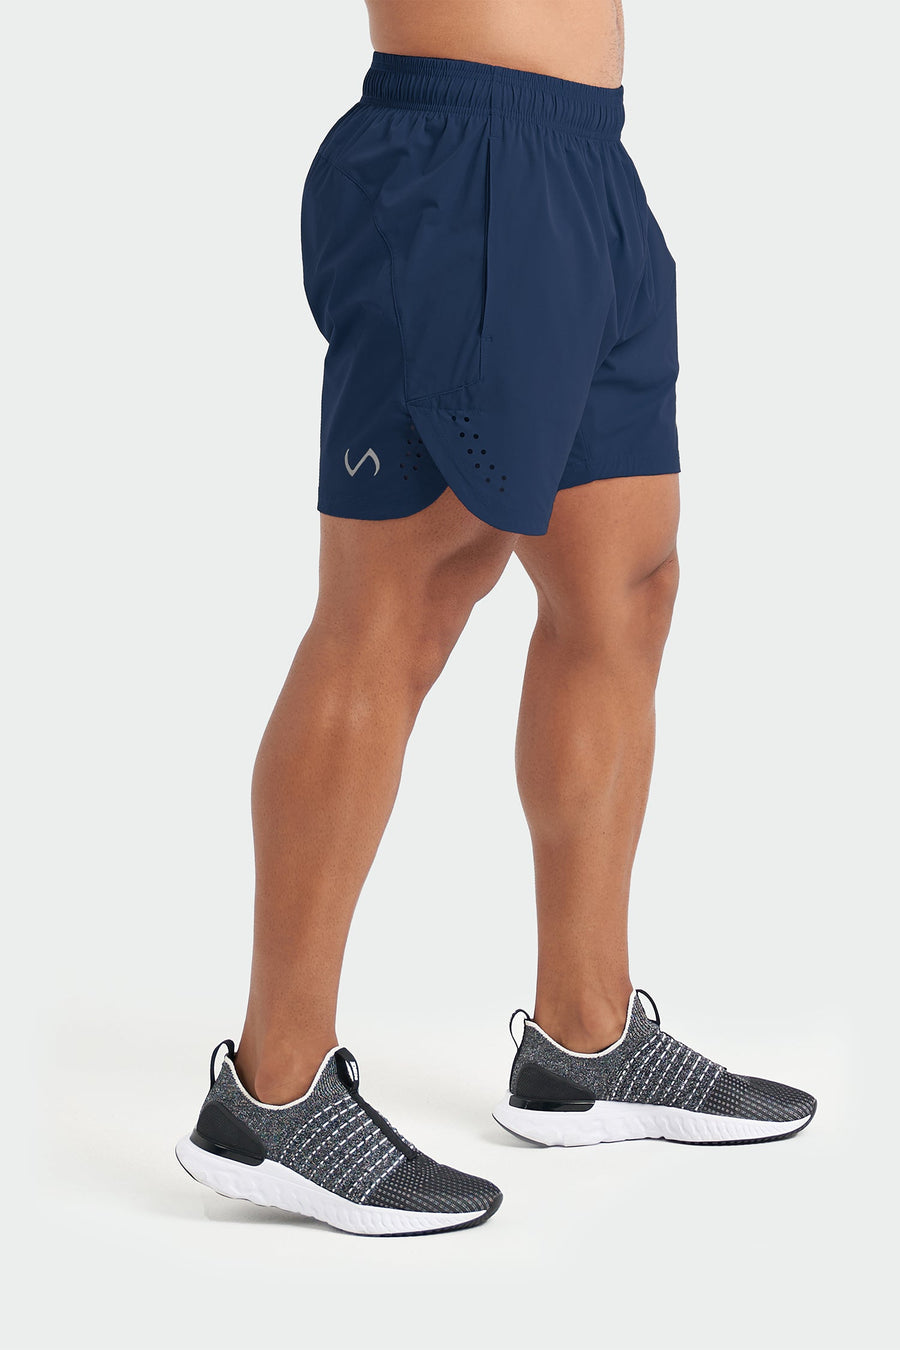 TLF Element 5” Shorts - Men’s 5 Inch inseam Shorts – Deep Navy - 4